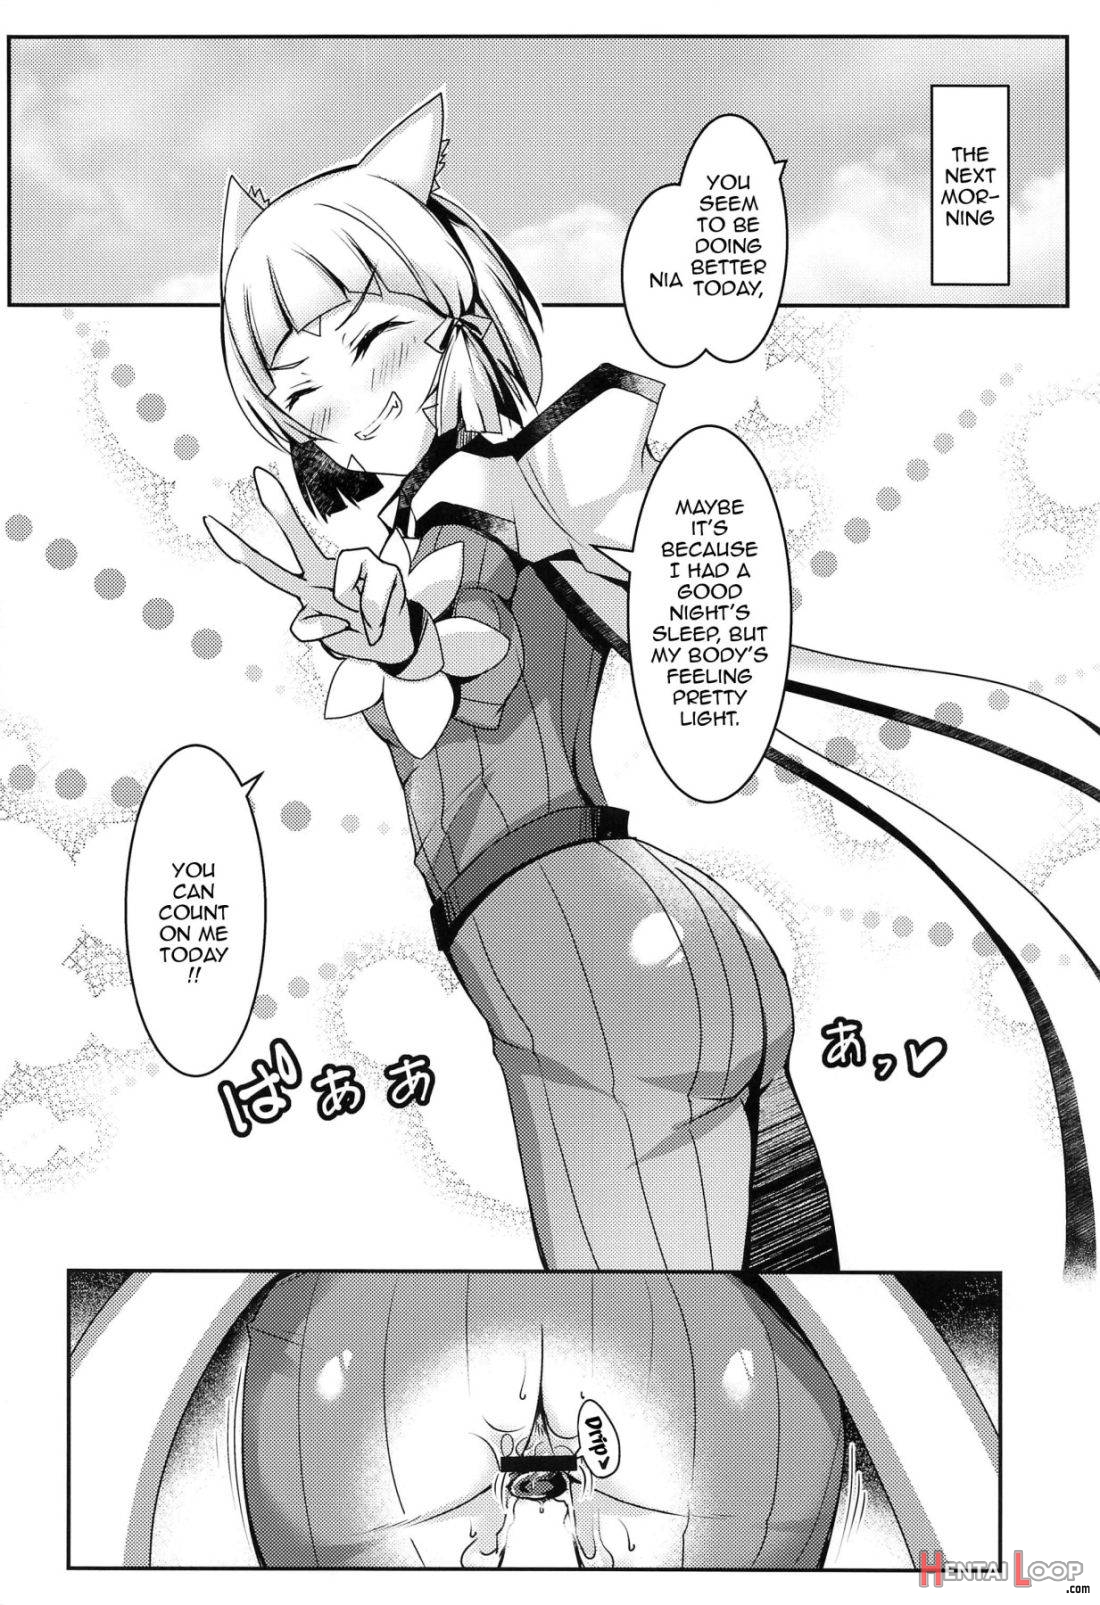 Nia-chan no Ecchi Hon page 19